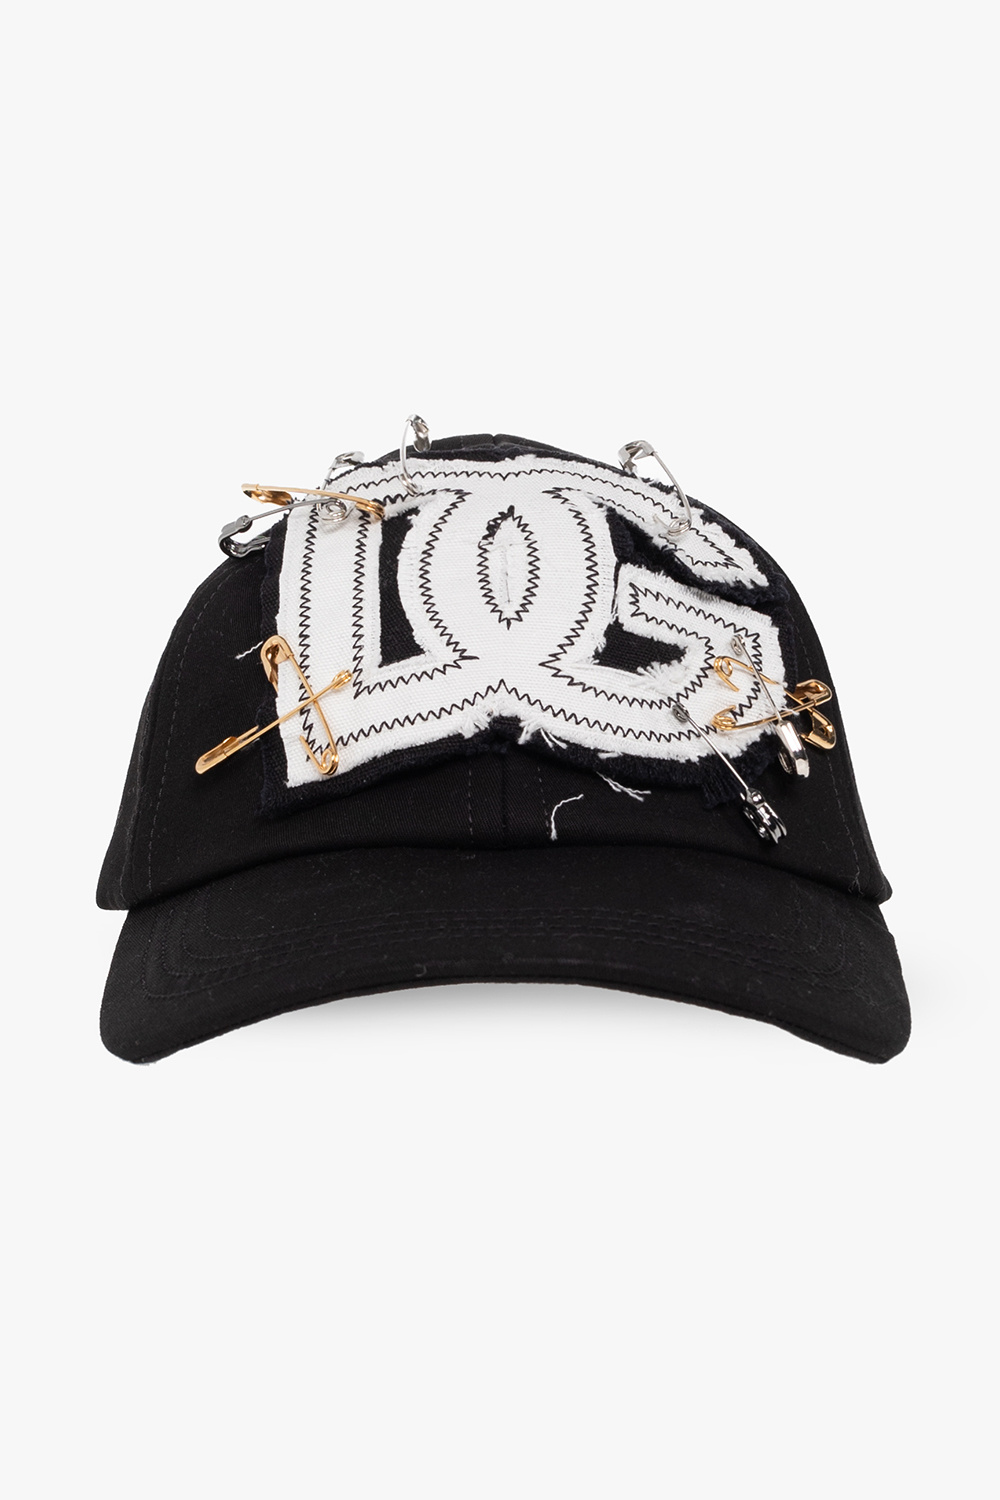 Gabbana logo-embroidered | Gabbana & cap | Dolce Dolce StclaircomoShops Braun balconette bra Men\'s & Baseball | Accessories